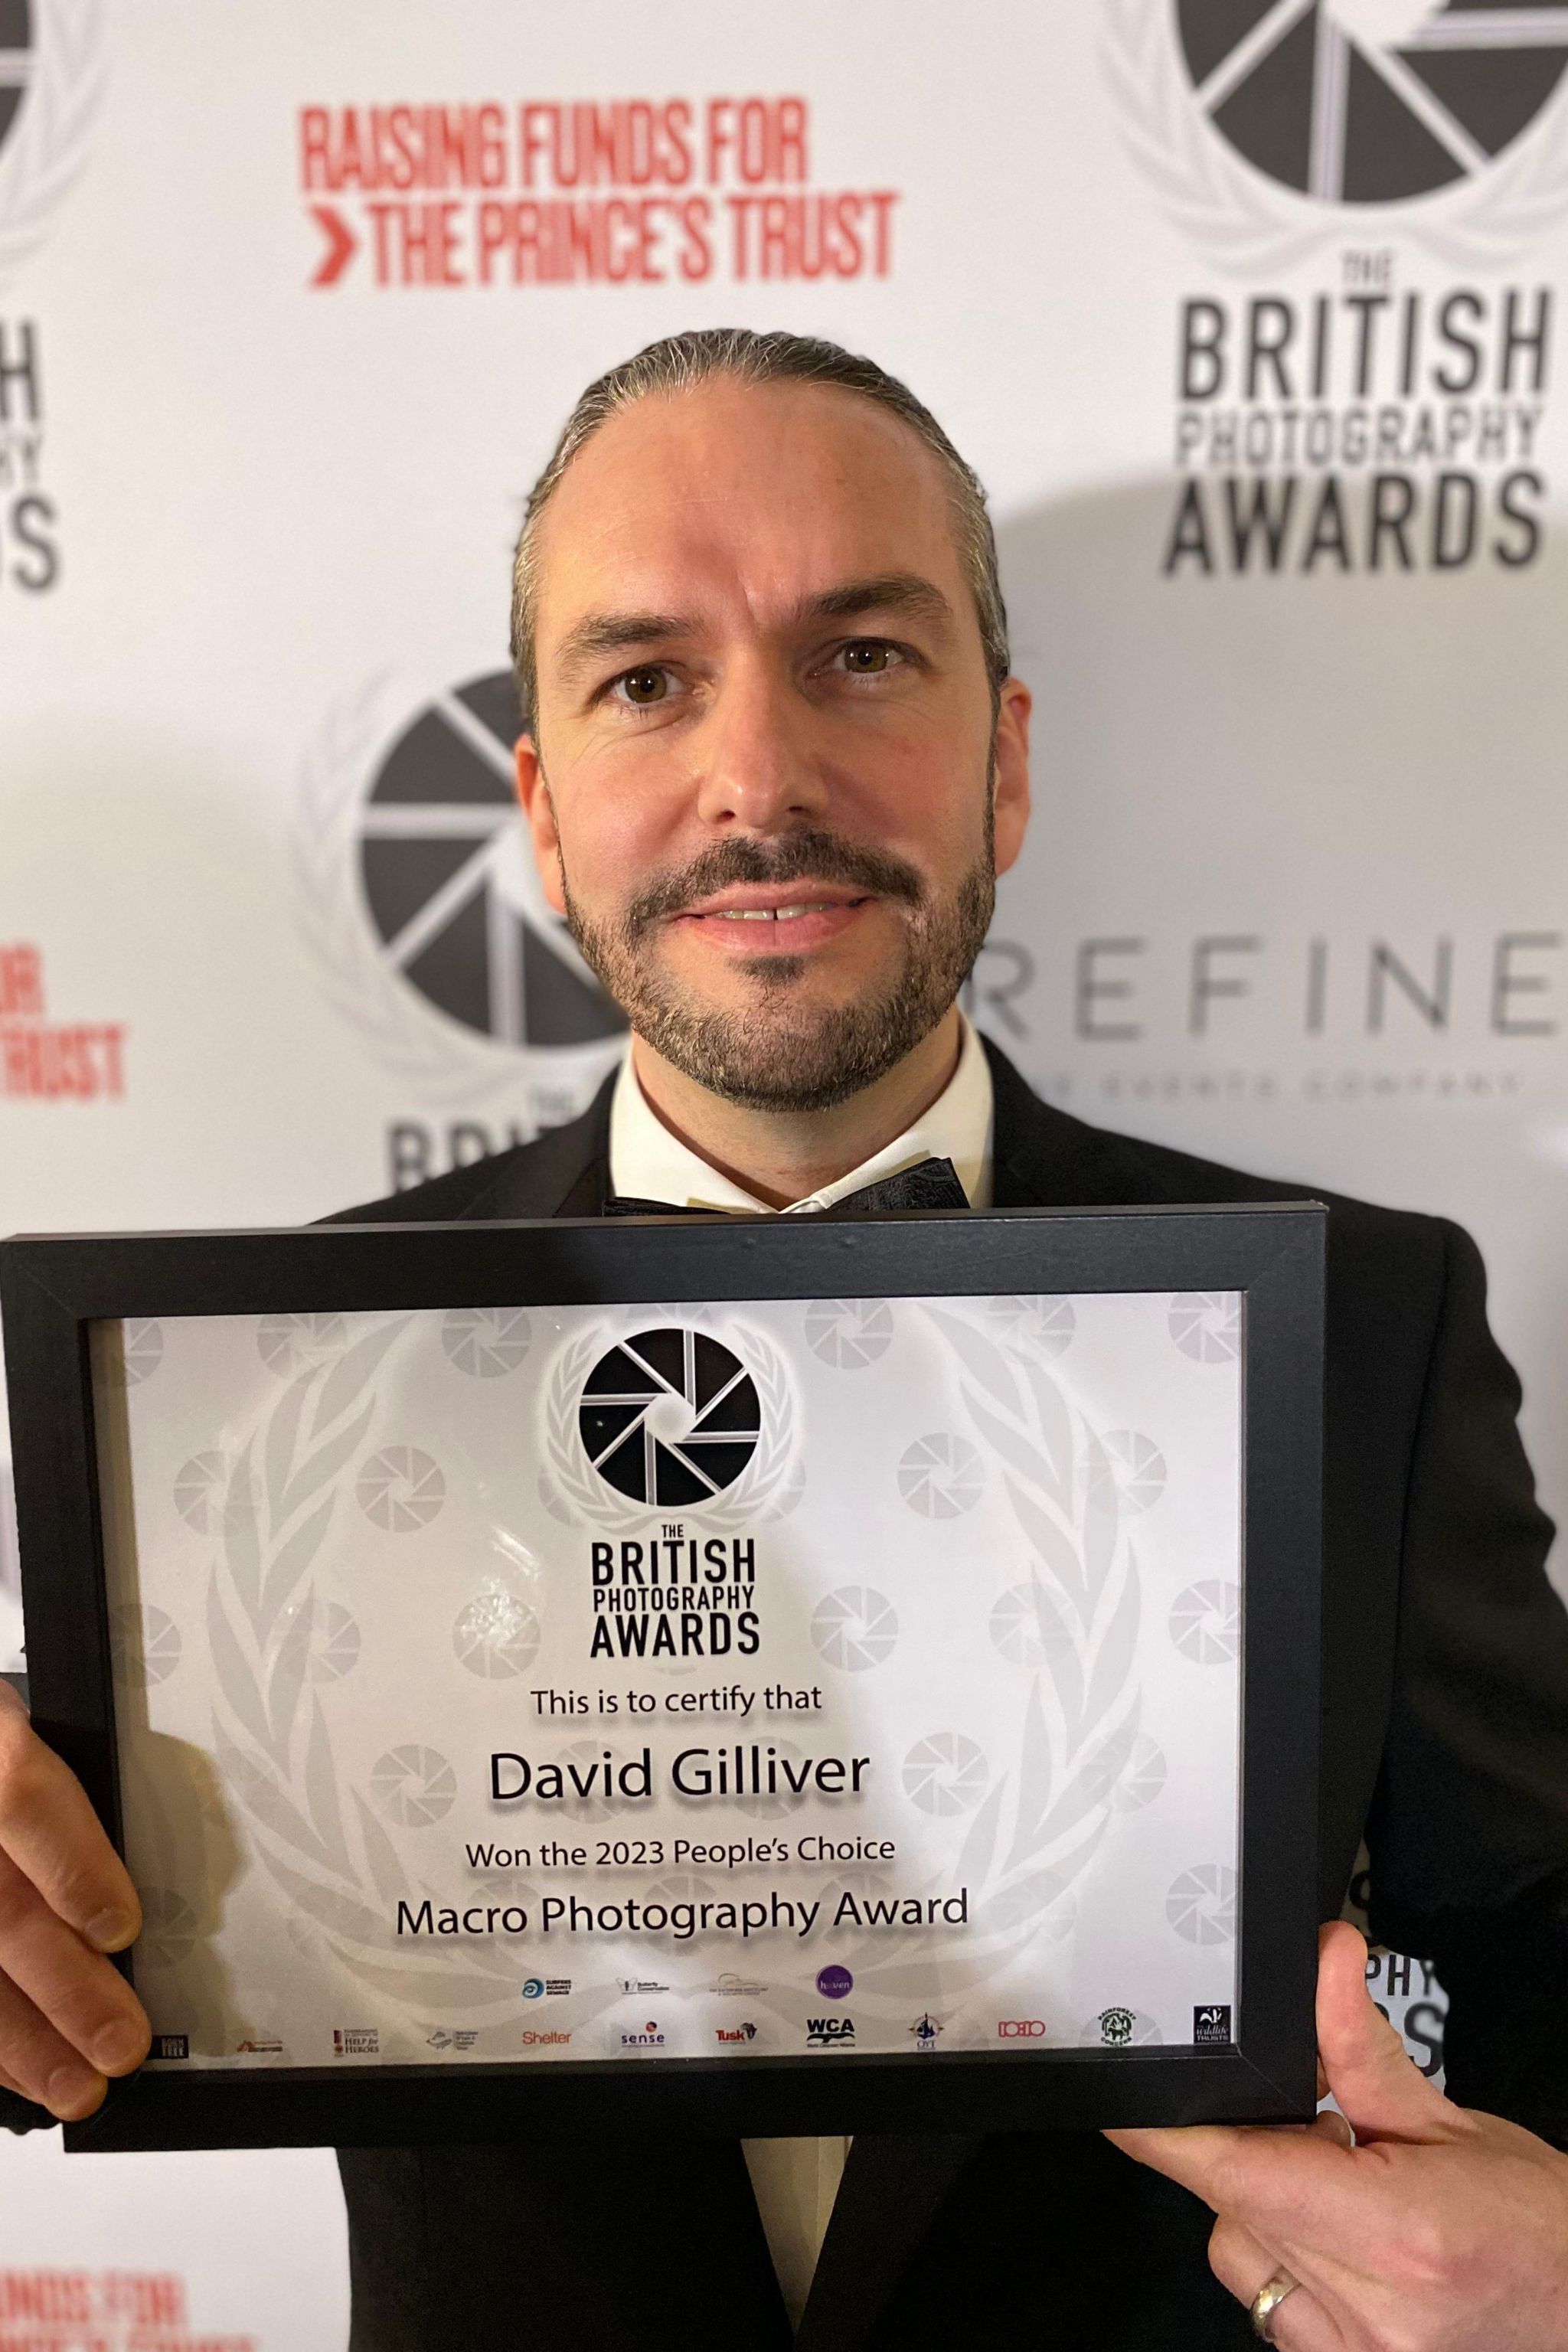 David Gilliver holding his award